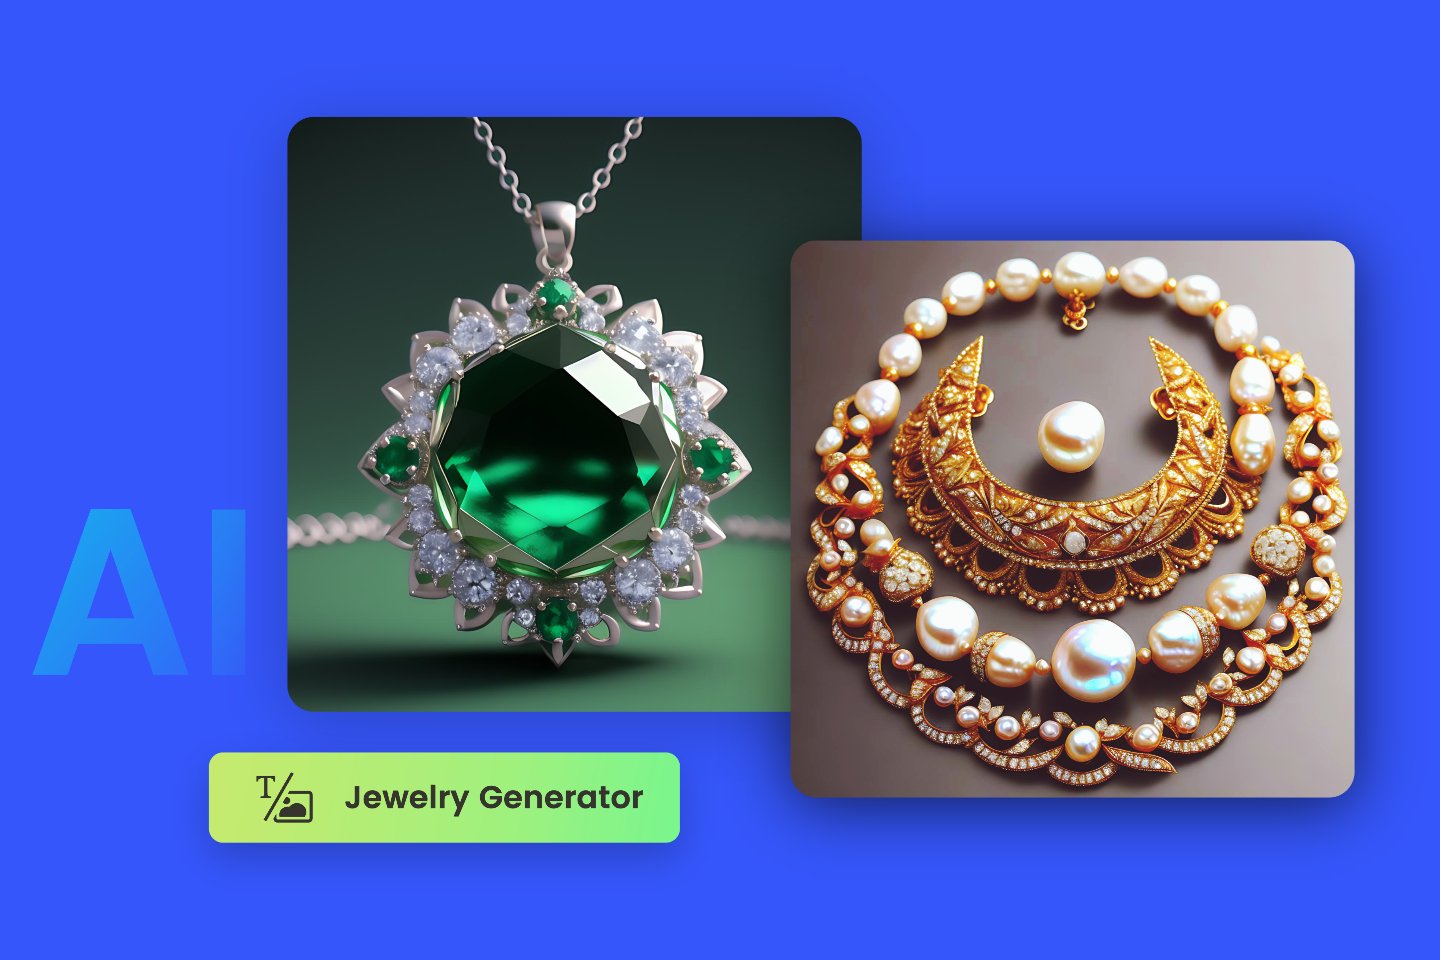 DIY Mixed-Media Jewelry Projects: Free Jewelry Tutorials